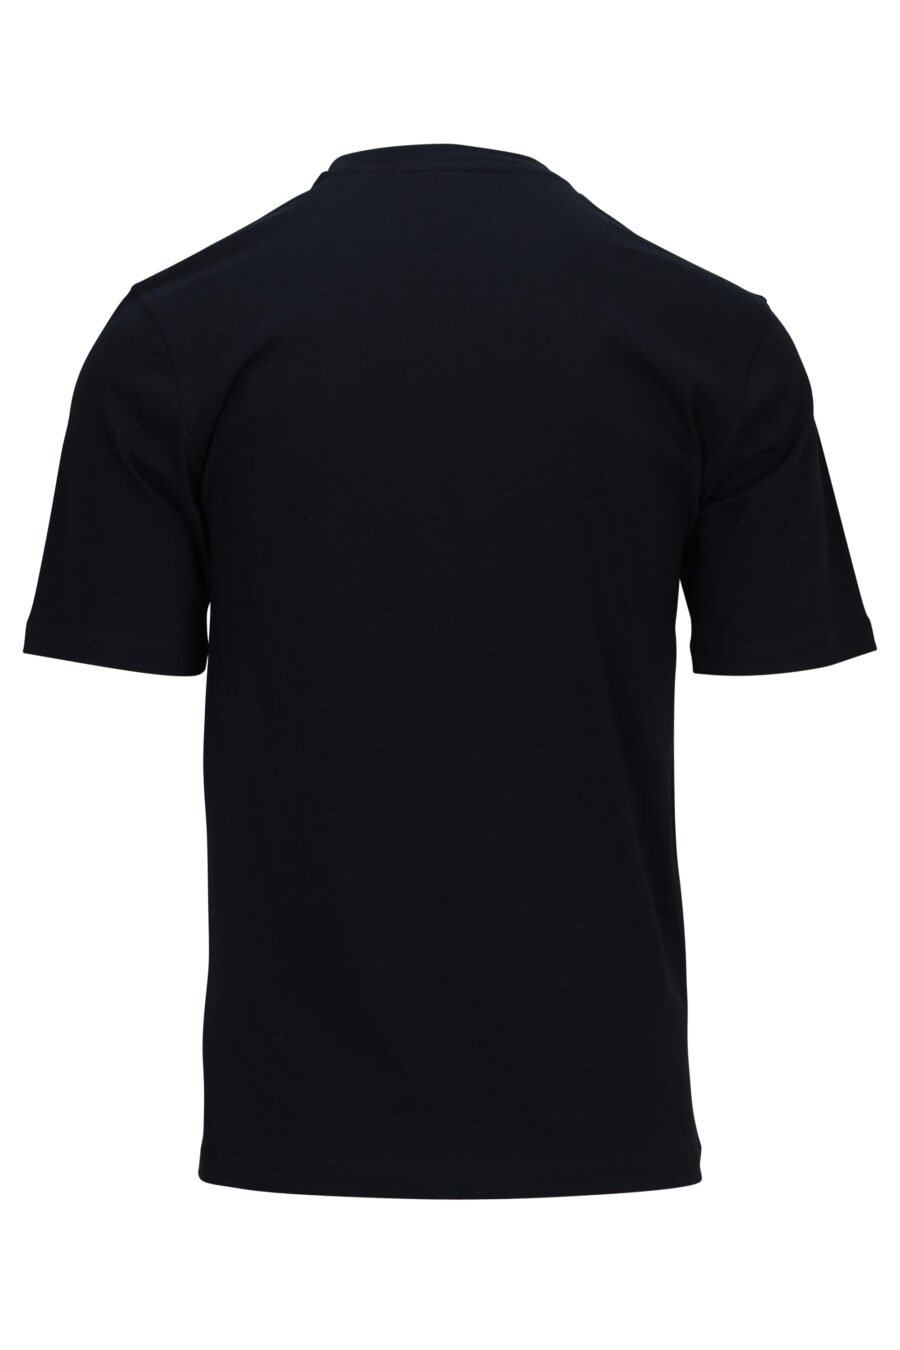 T-shirt preta com mini logótipo "teddy tailor" - 667113108179 1